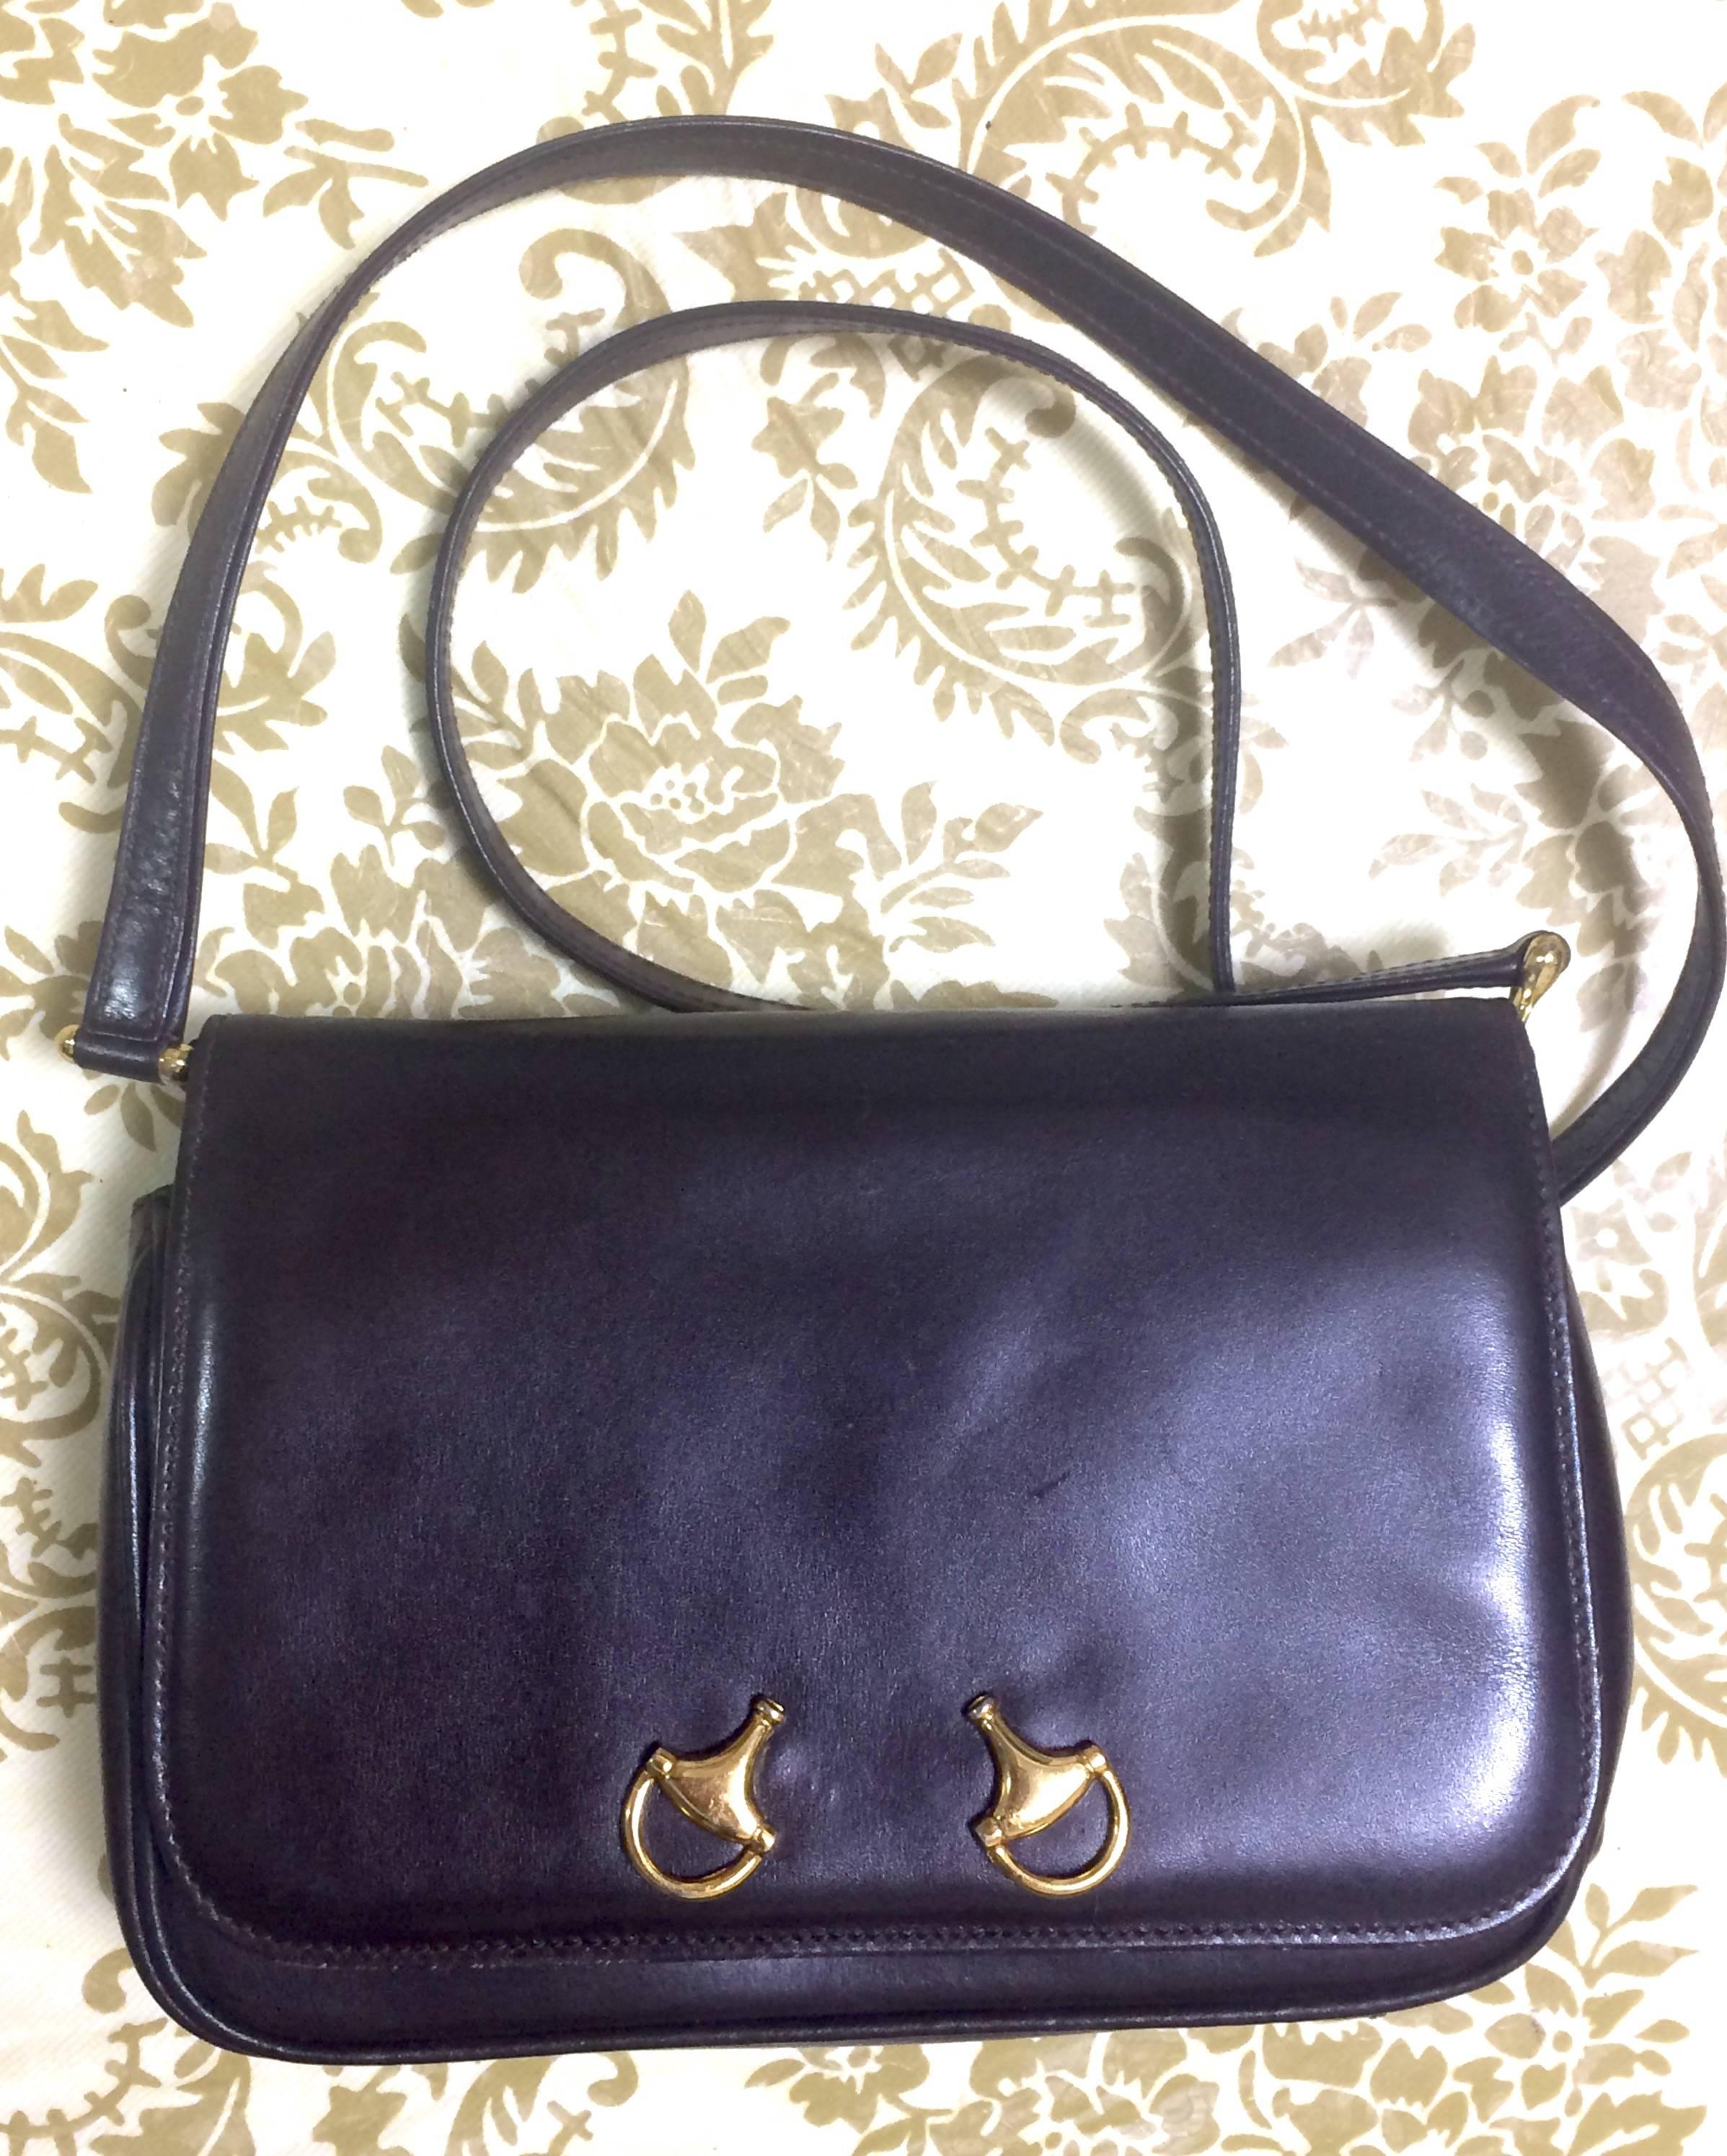 Vintage Gucci dark brown leather classic shoulder bag with 2 horsebit motifs. 4